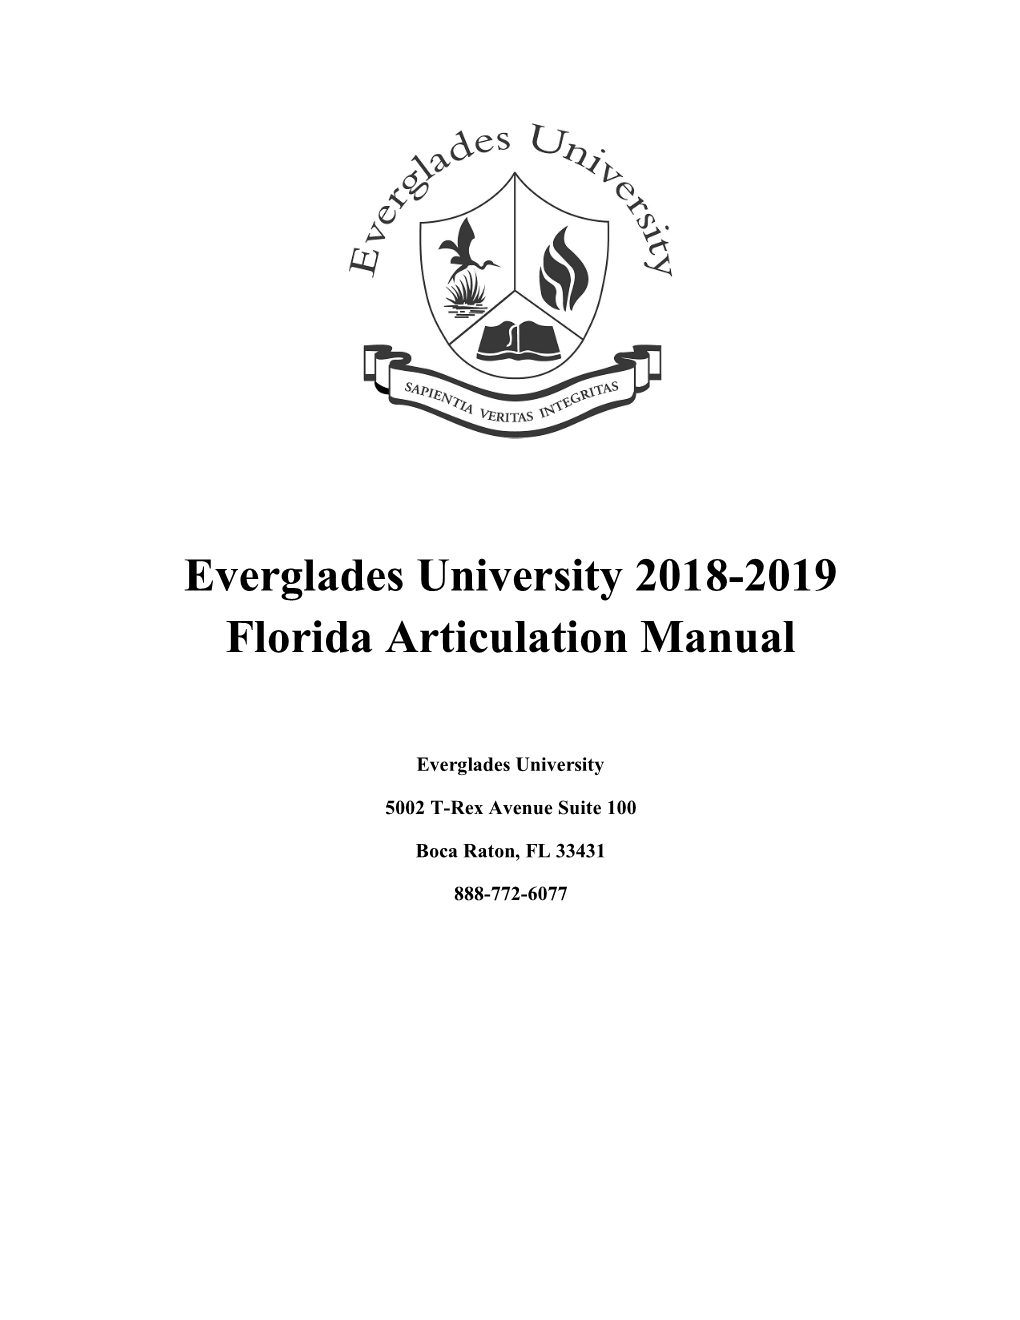 Everglades University 2018-2019 Florida Articulation Manual